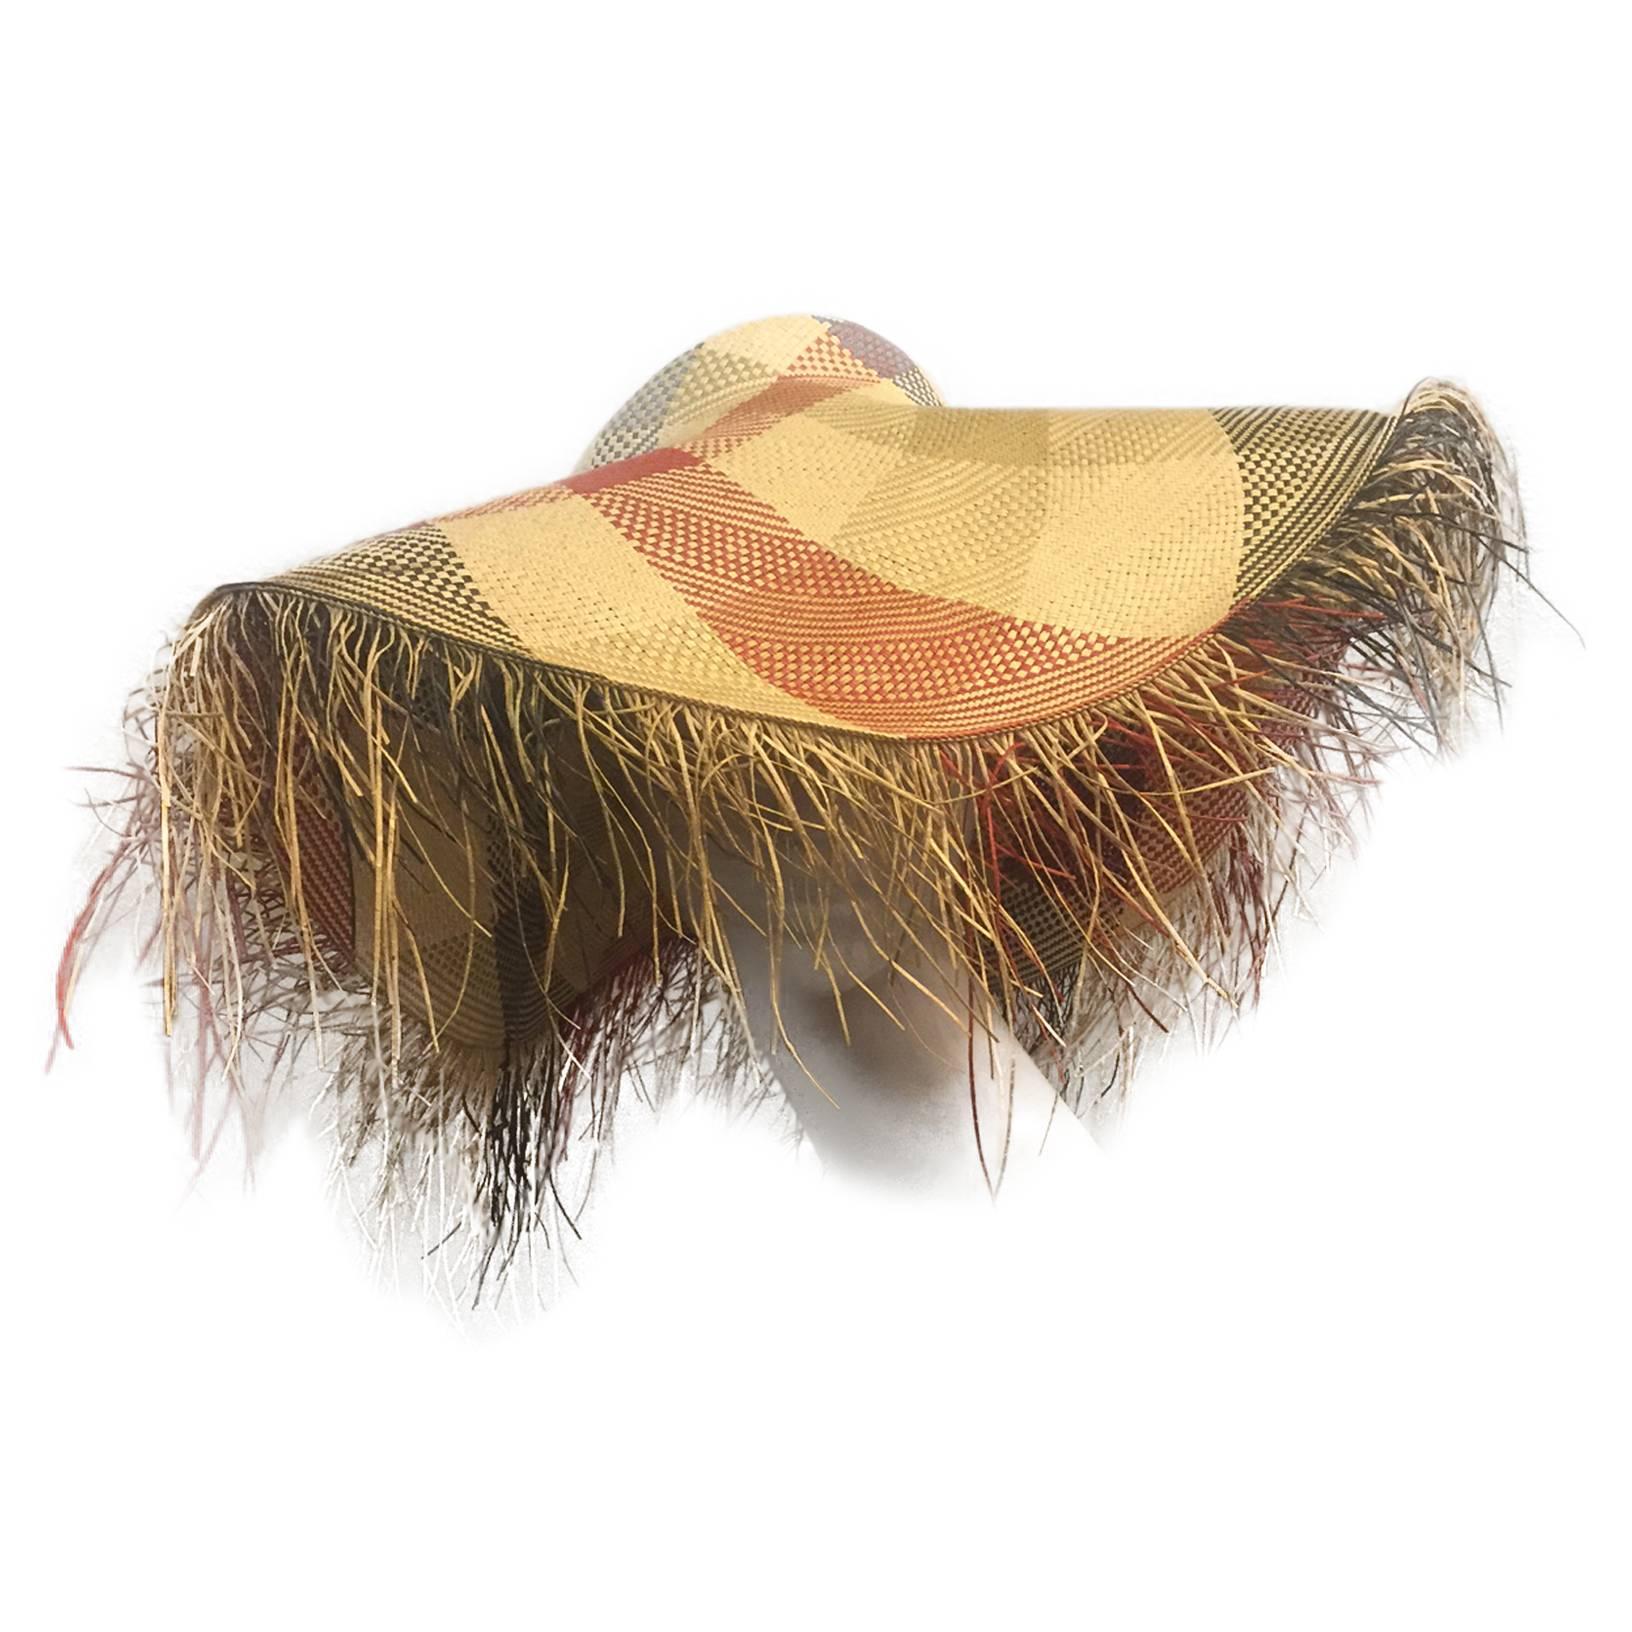 1940s Woven Plaid Straw Sun Hat with Dramatic Straw Fringed Brim 